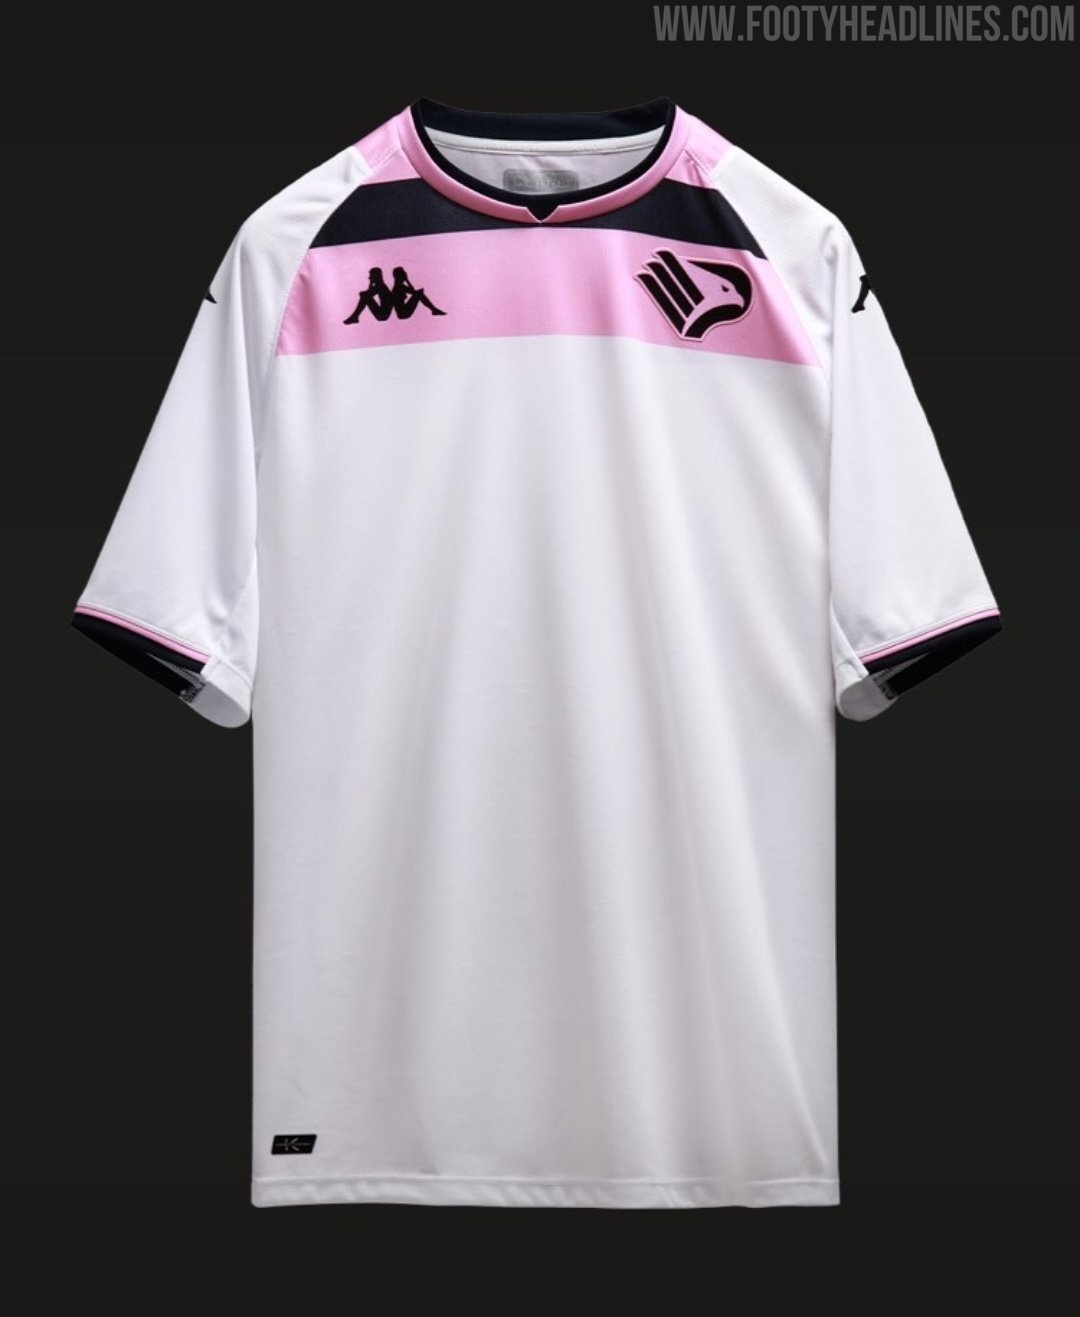 Palermo Maglia Gara Away 14/15 #9ine  Camisetas deportivas, Camisa de  fútbol, Camiseta de fútbol